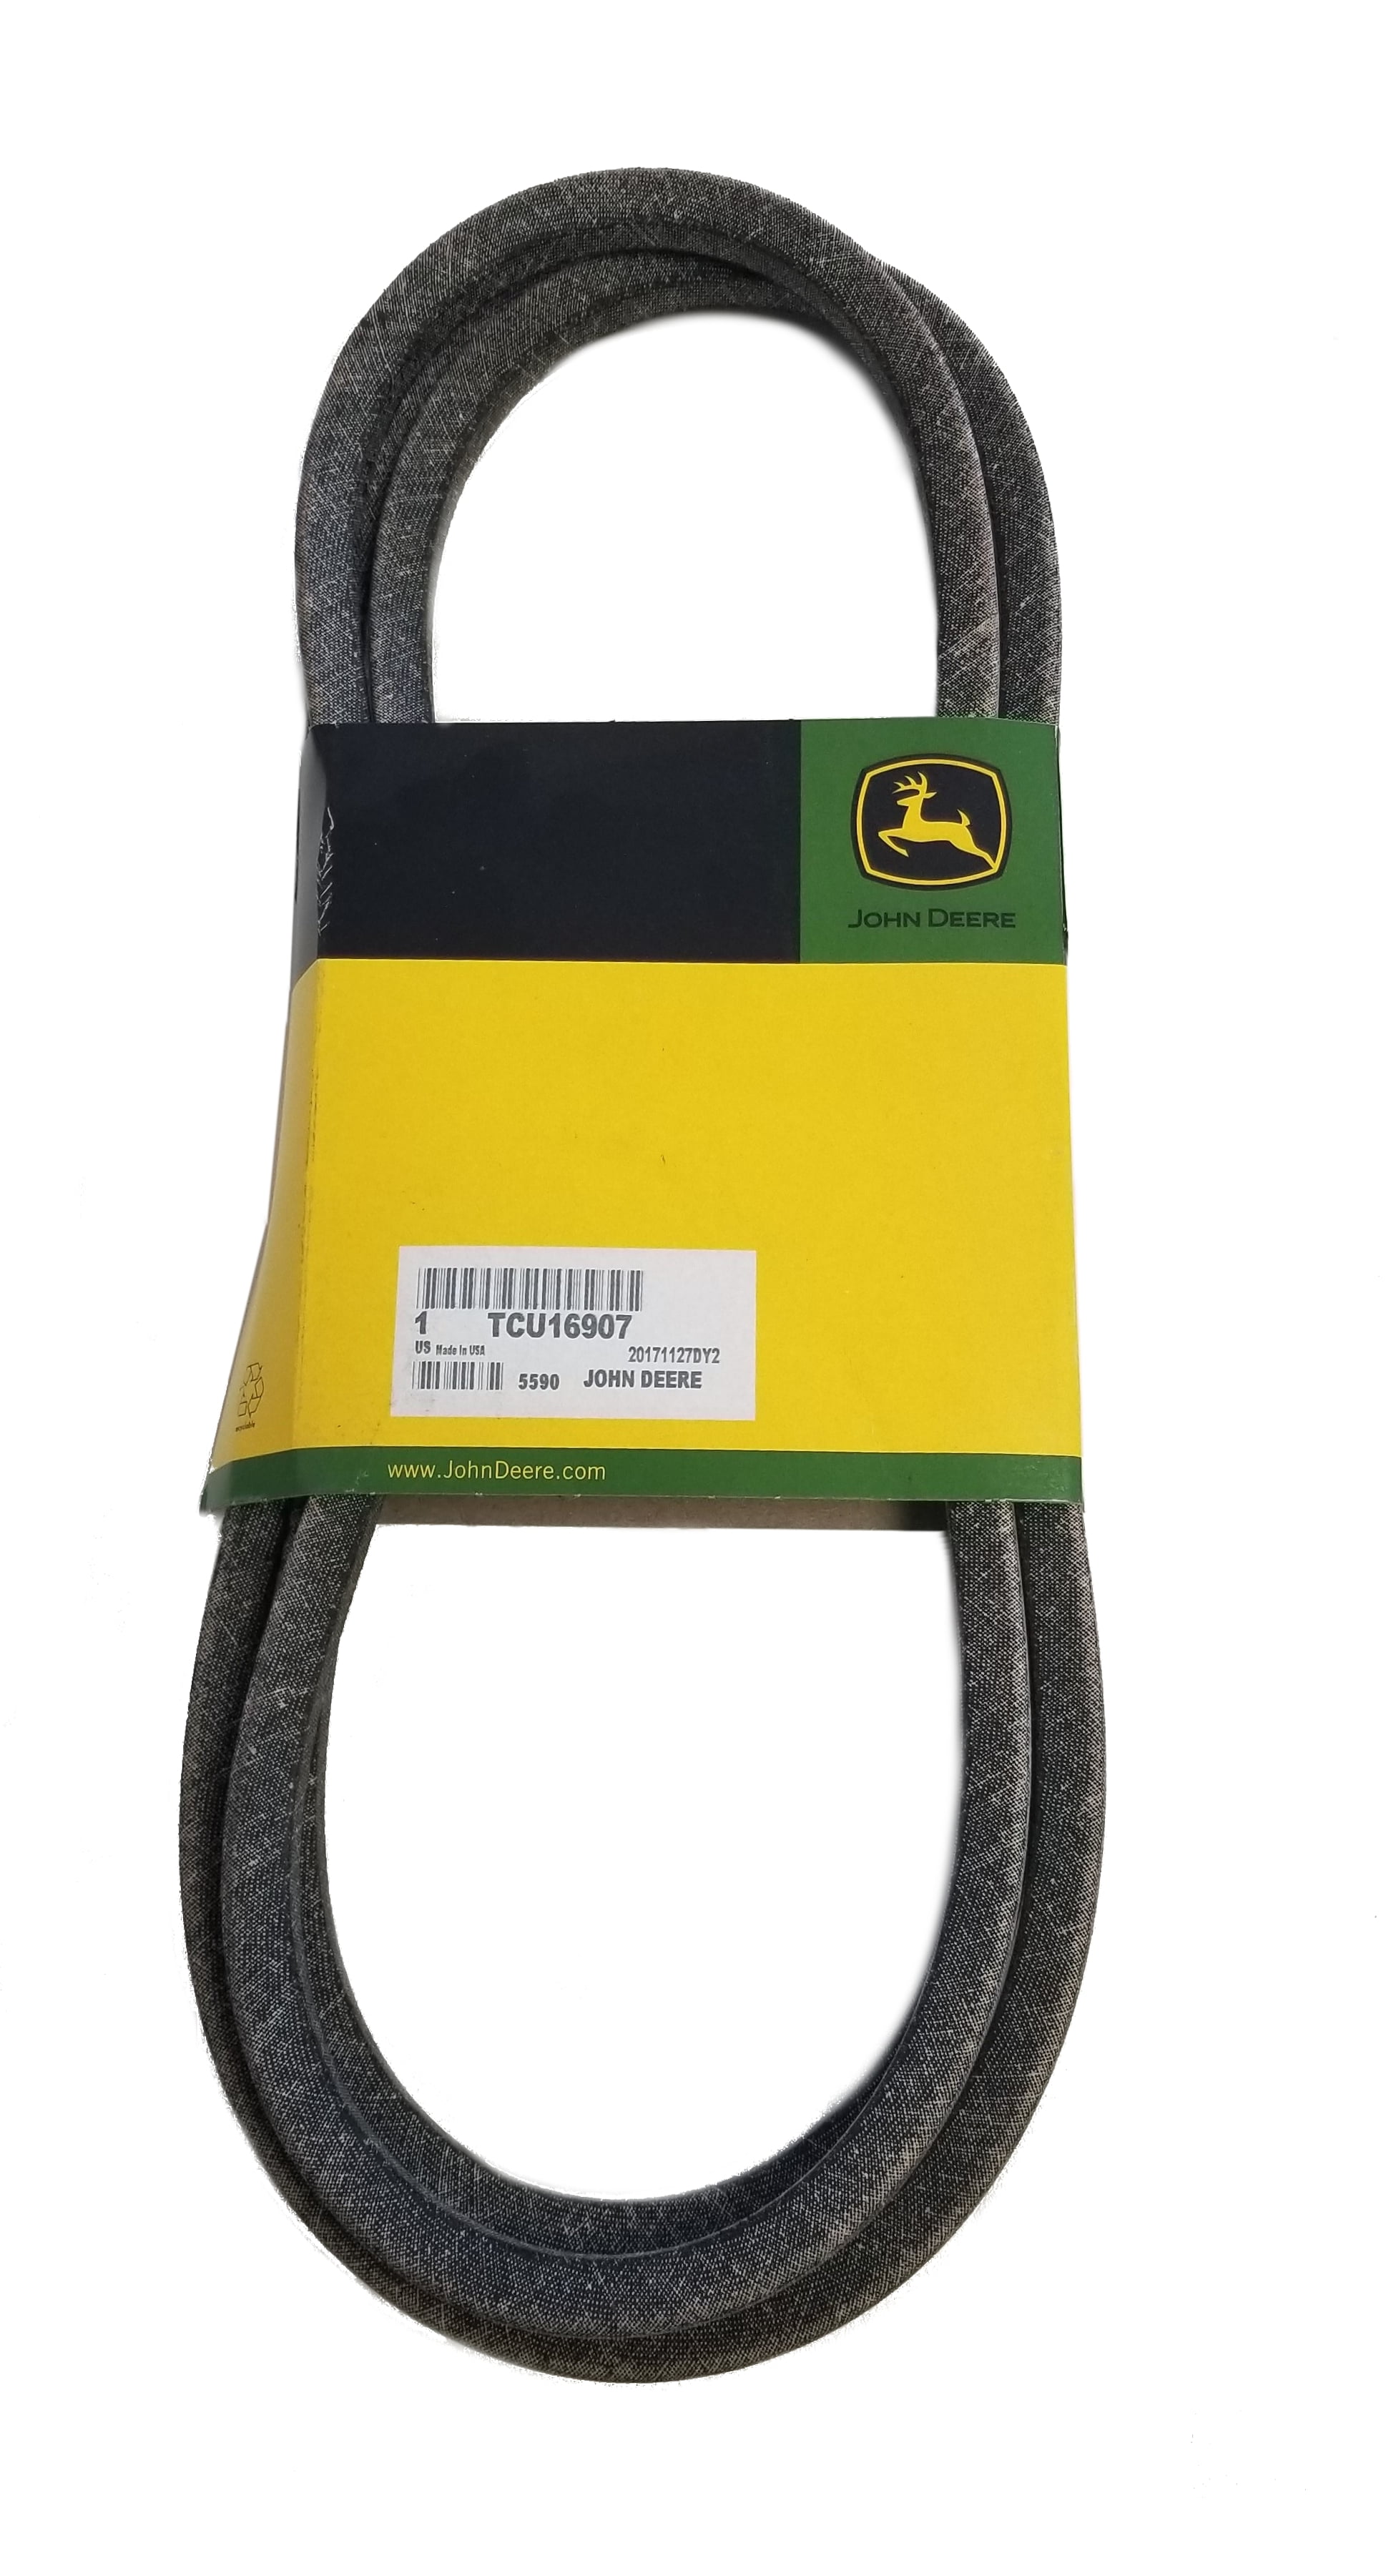 Replacement Belt made with Kevlar for John Deere TCU16907 